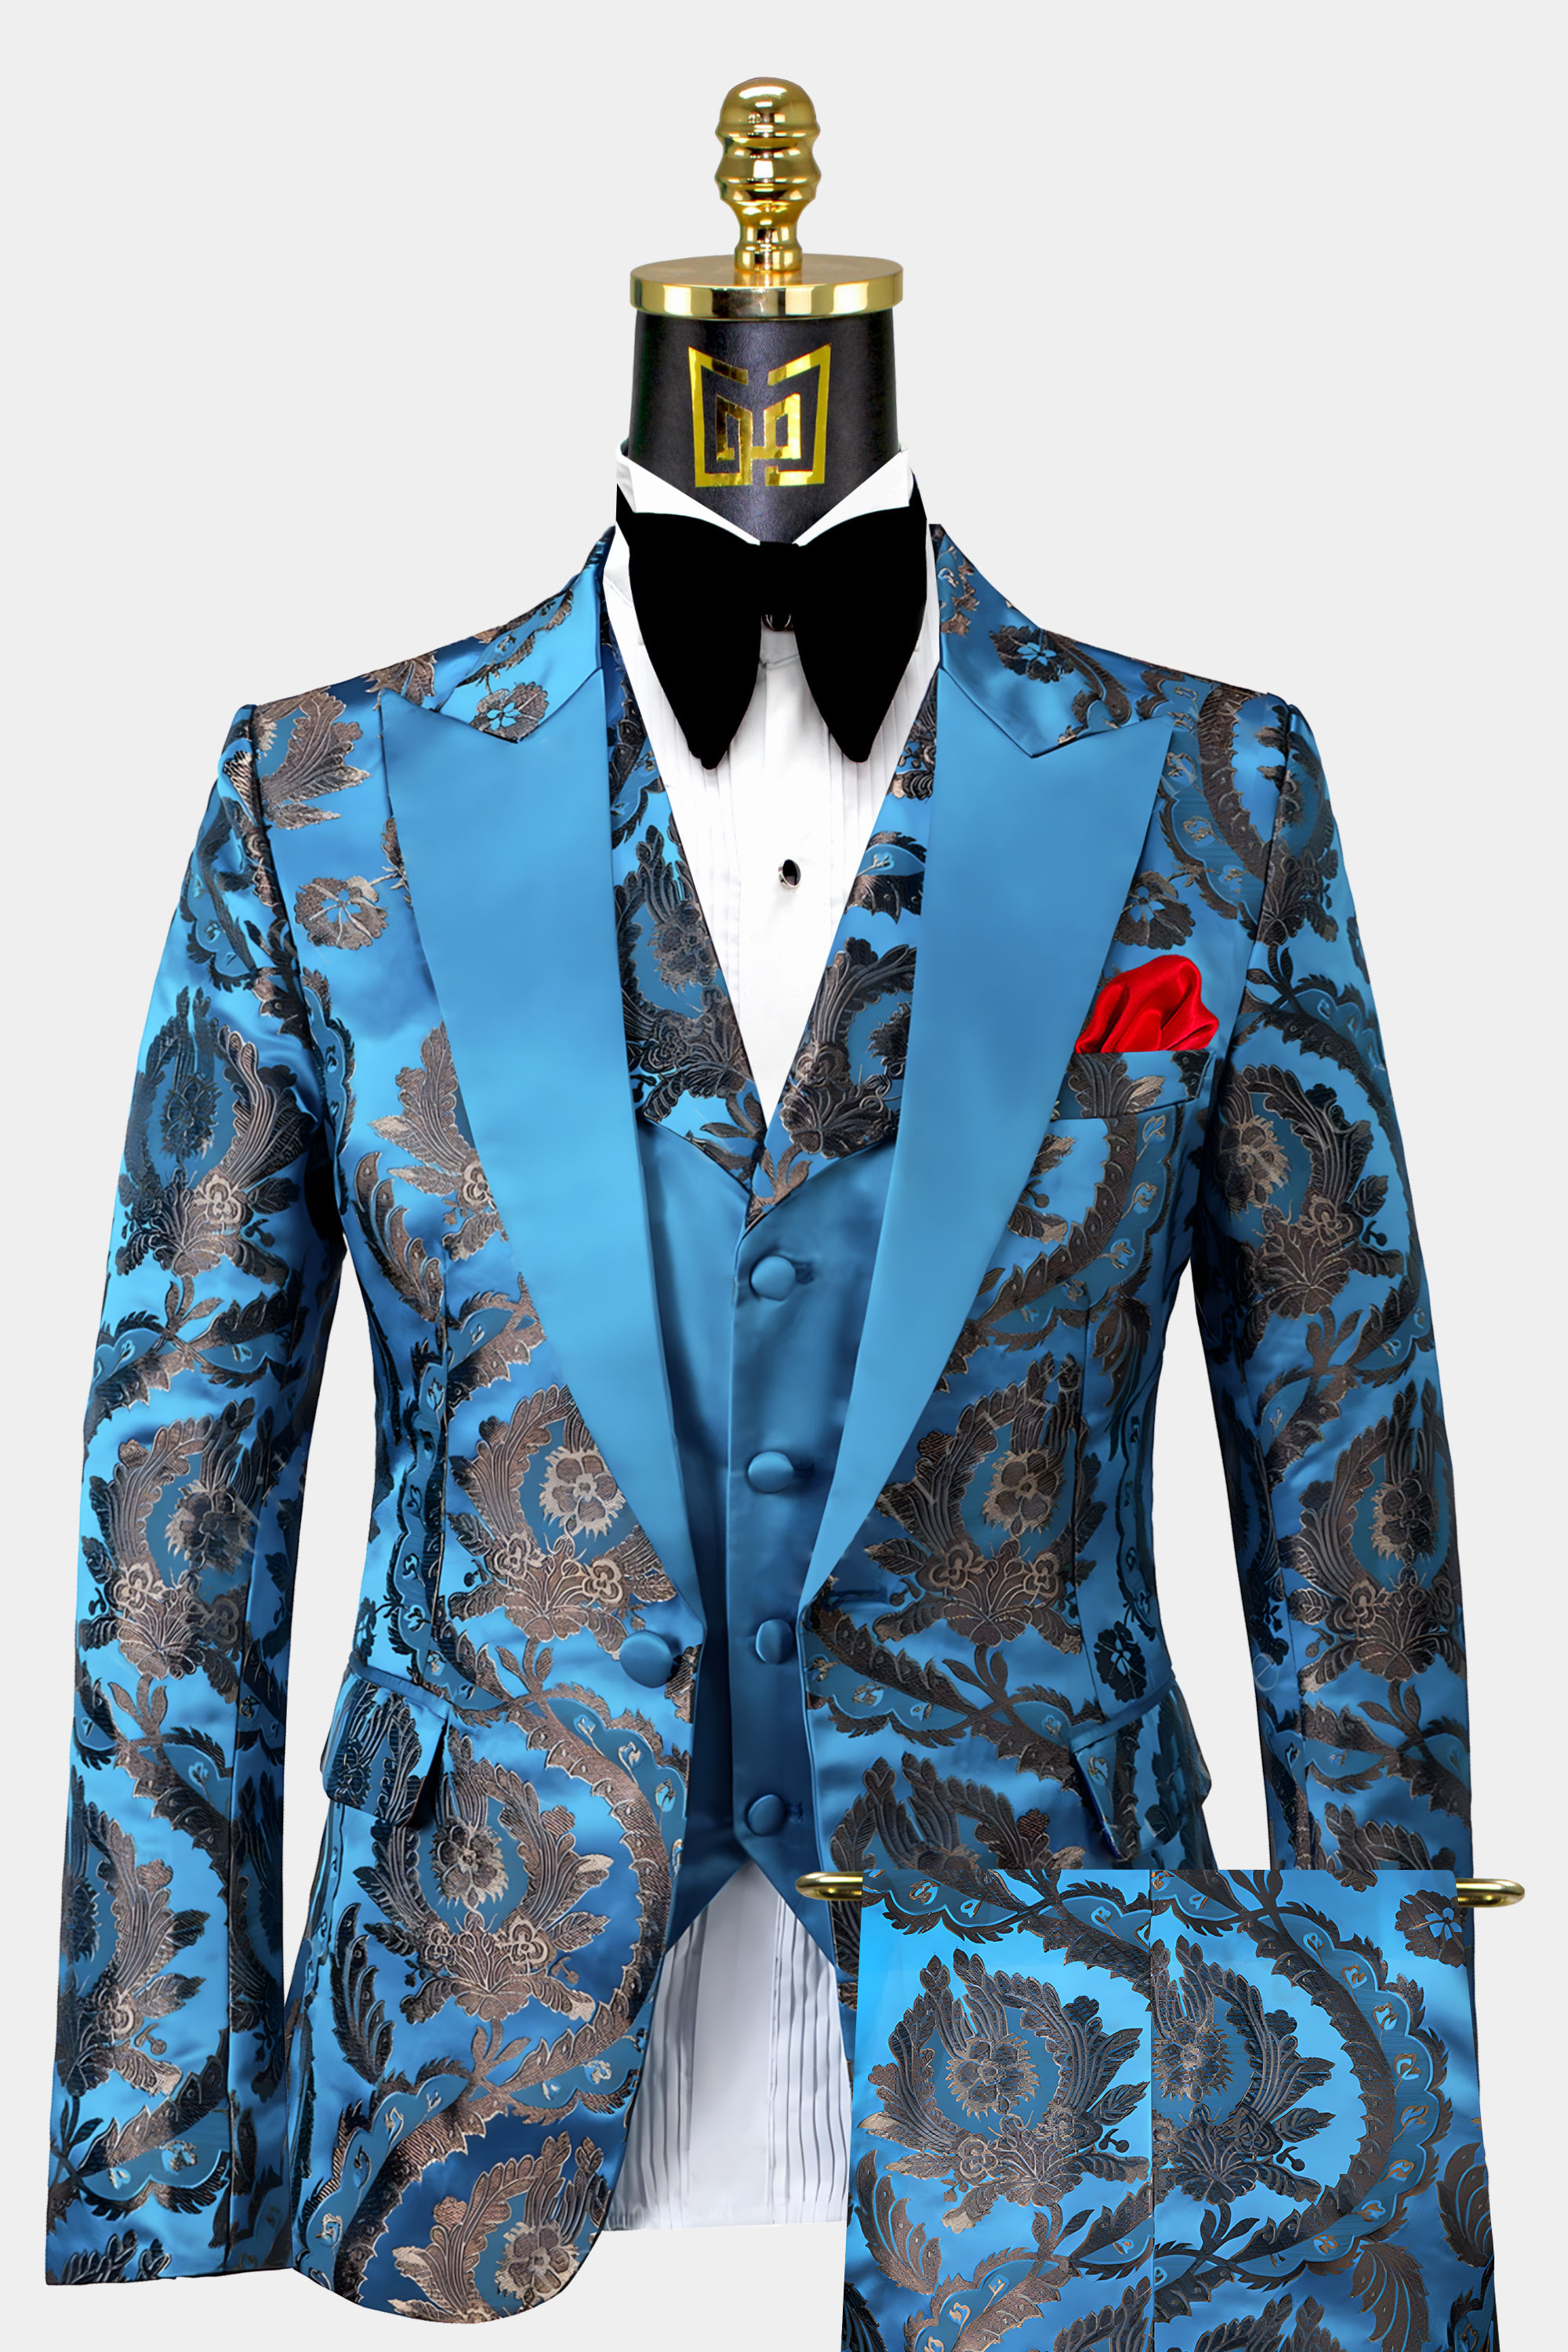 3-Pie3-Piece-Light-Blue-Tuxedo-Groom-Prom-Wedding-Suit-For-Me,-from-Gentlemansguru.comce-Light-Blue-Tuxedo-Groom-Prom-Wedding-Suit-For-Me,-from-Gentlemansguru.com